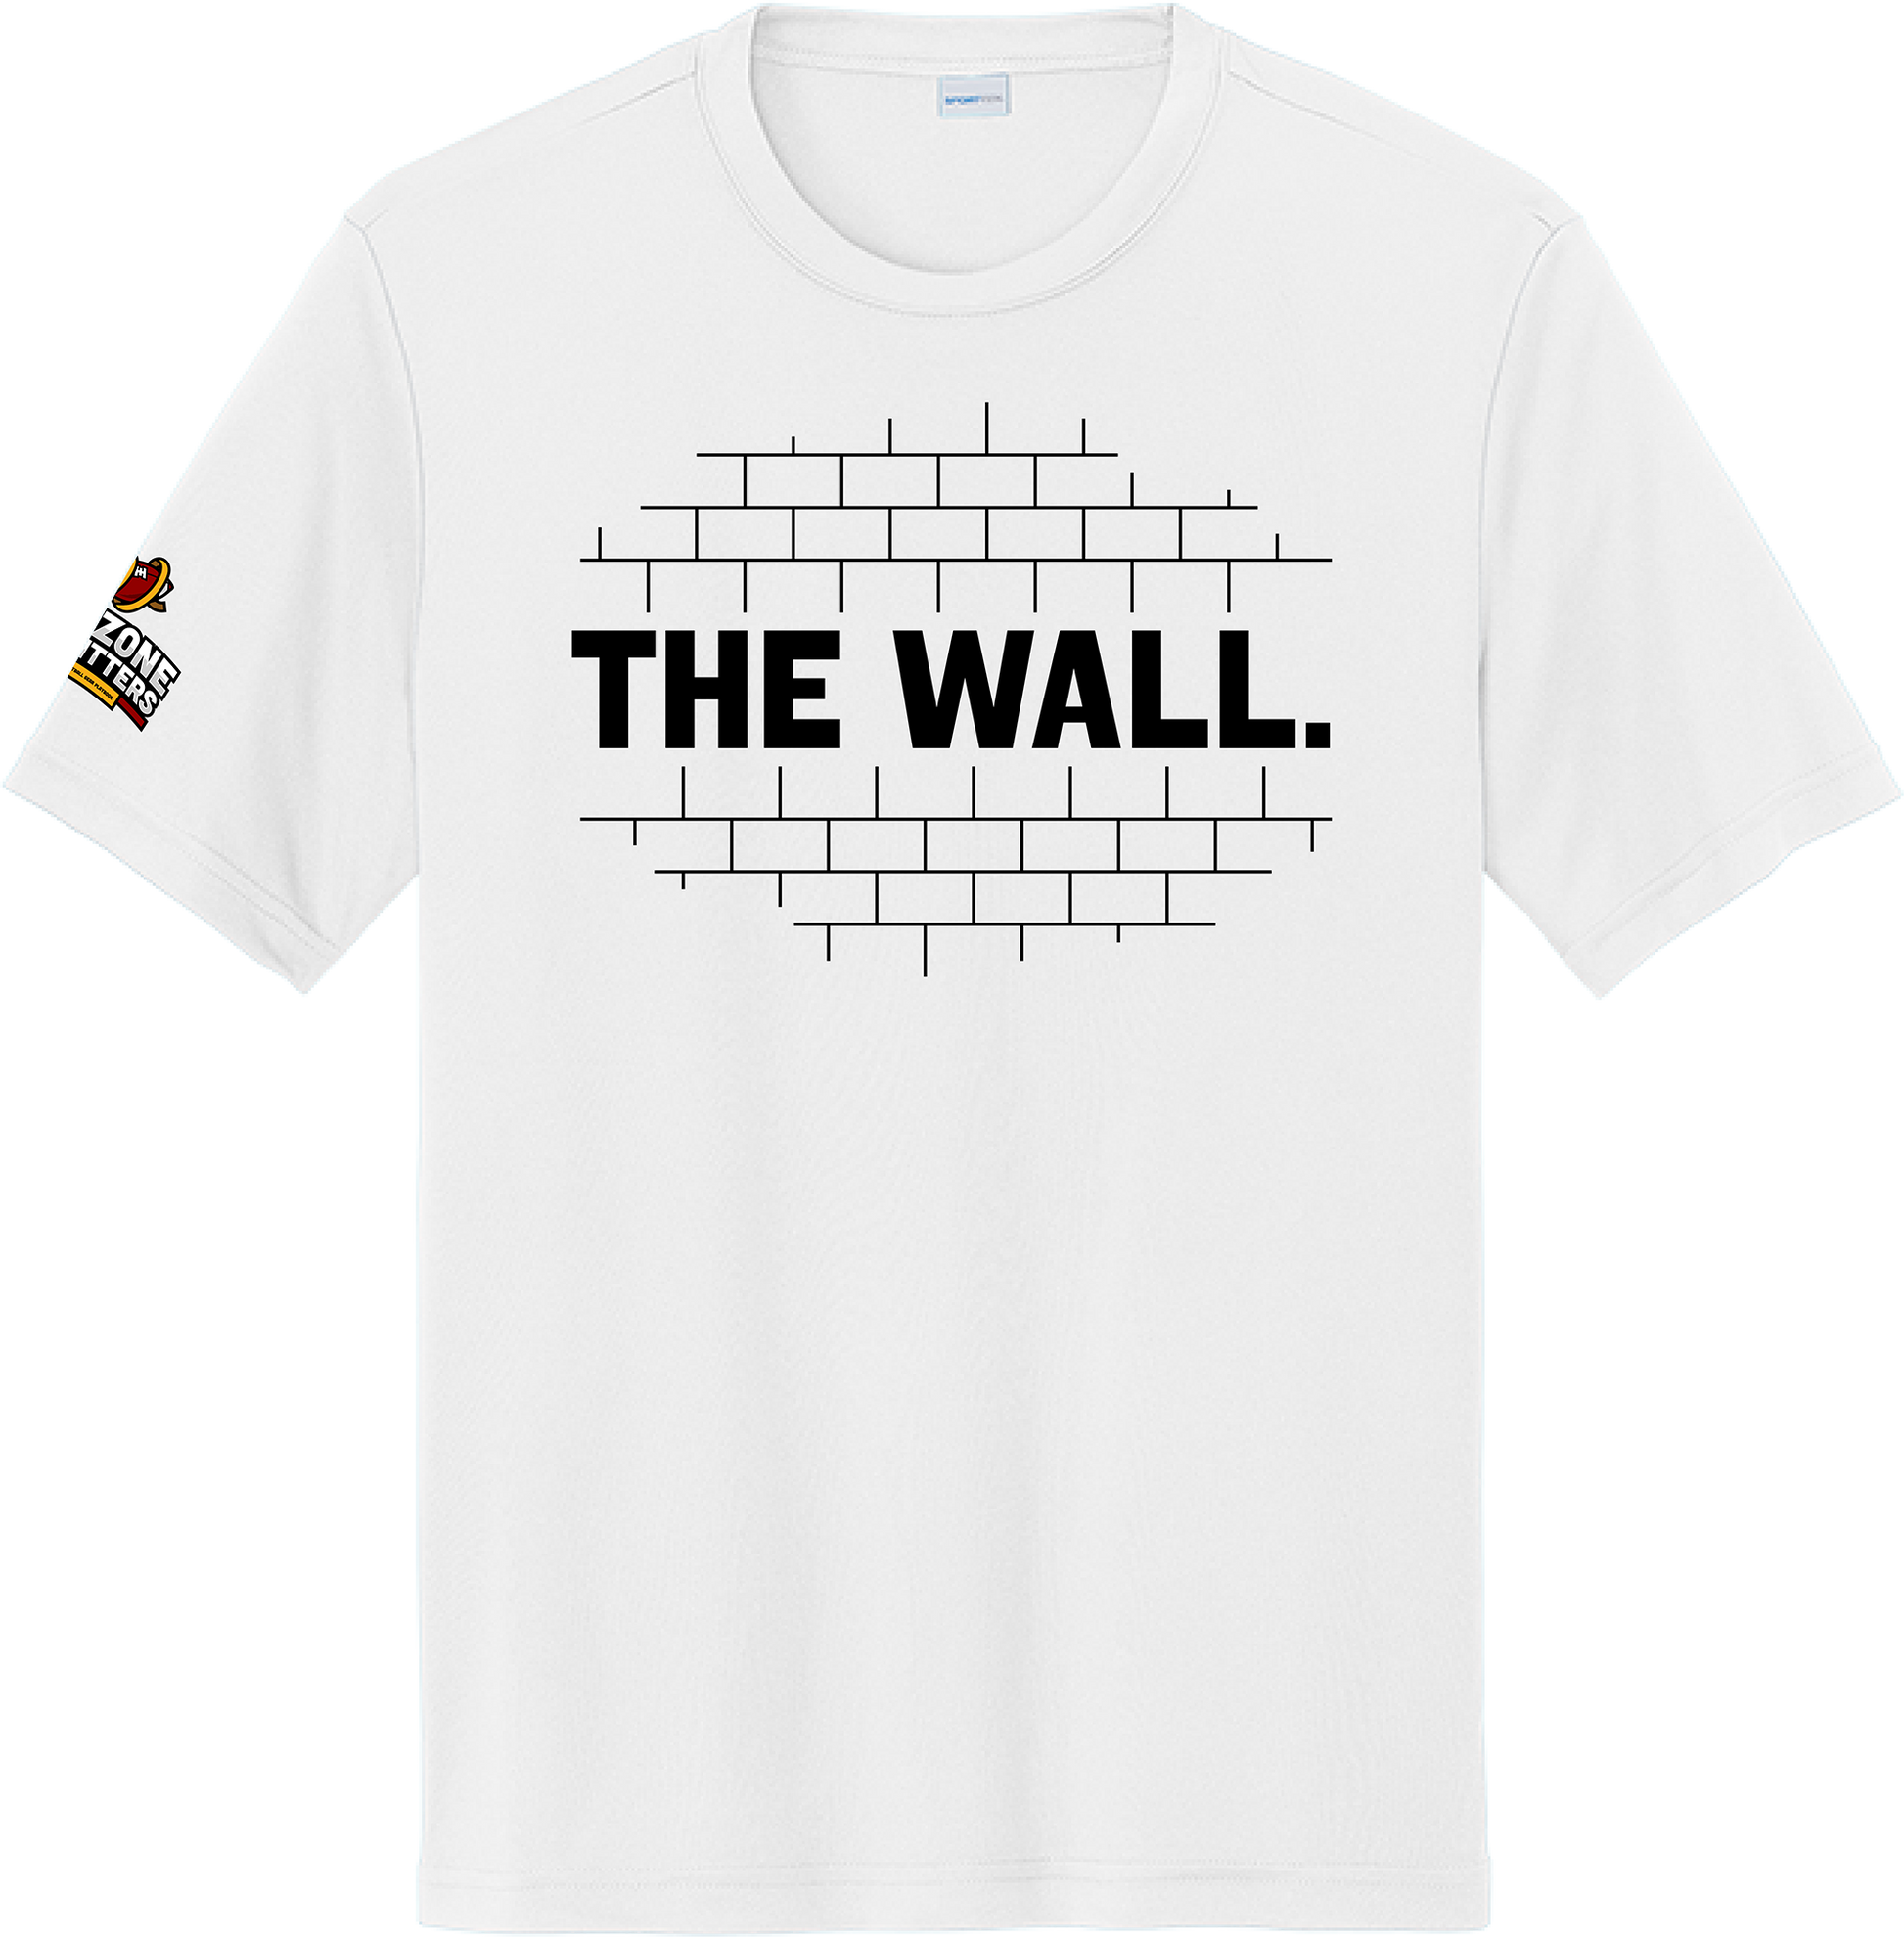 The Brick Wall - Youth Short Sleeve Shirt